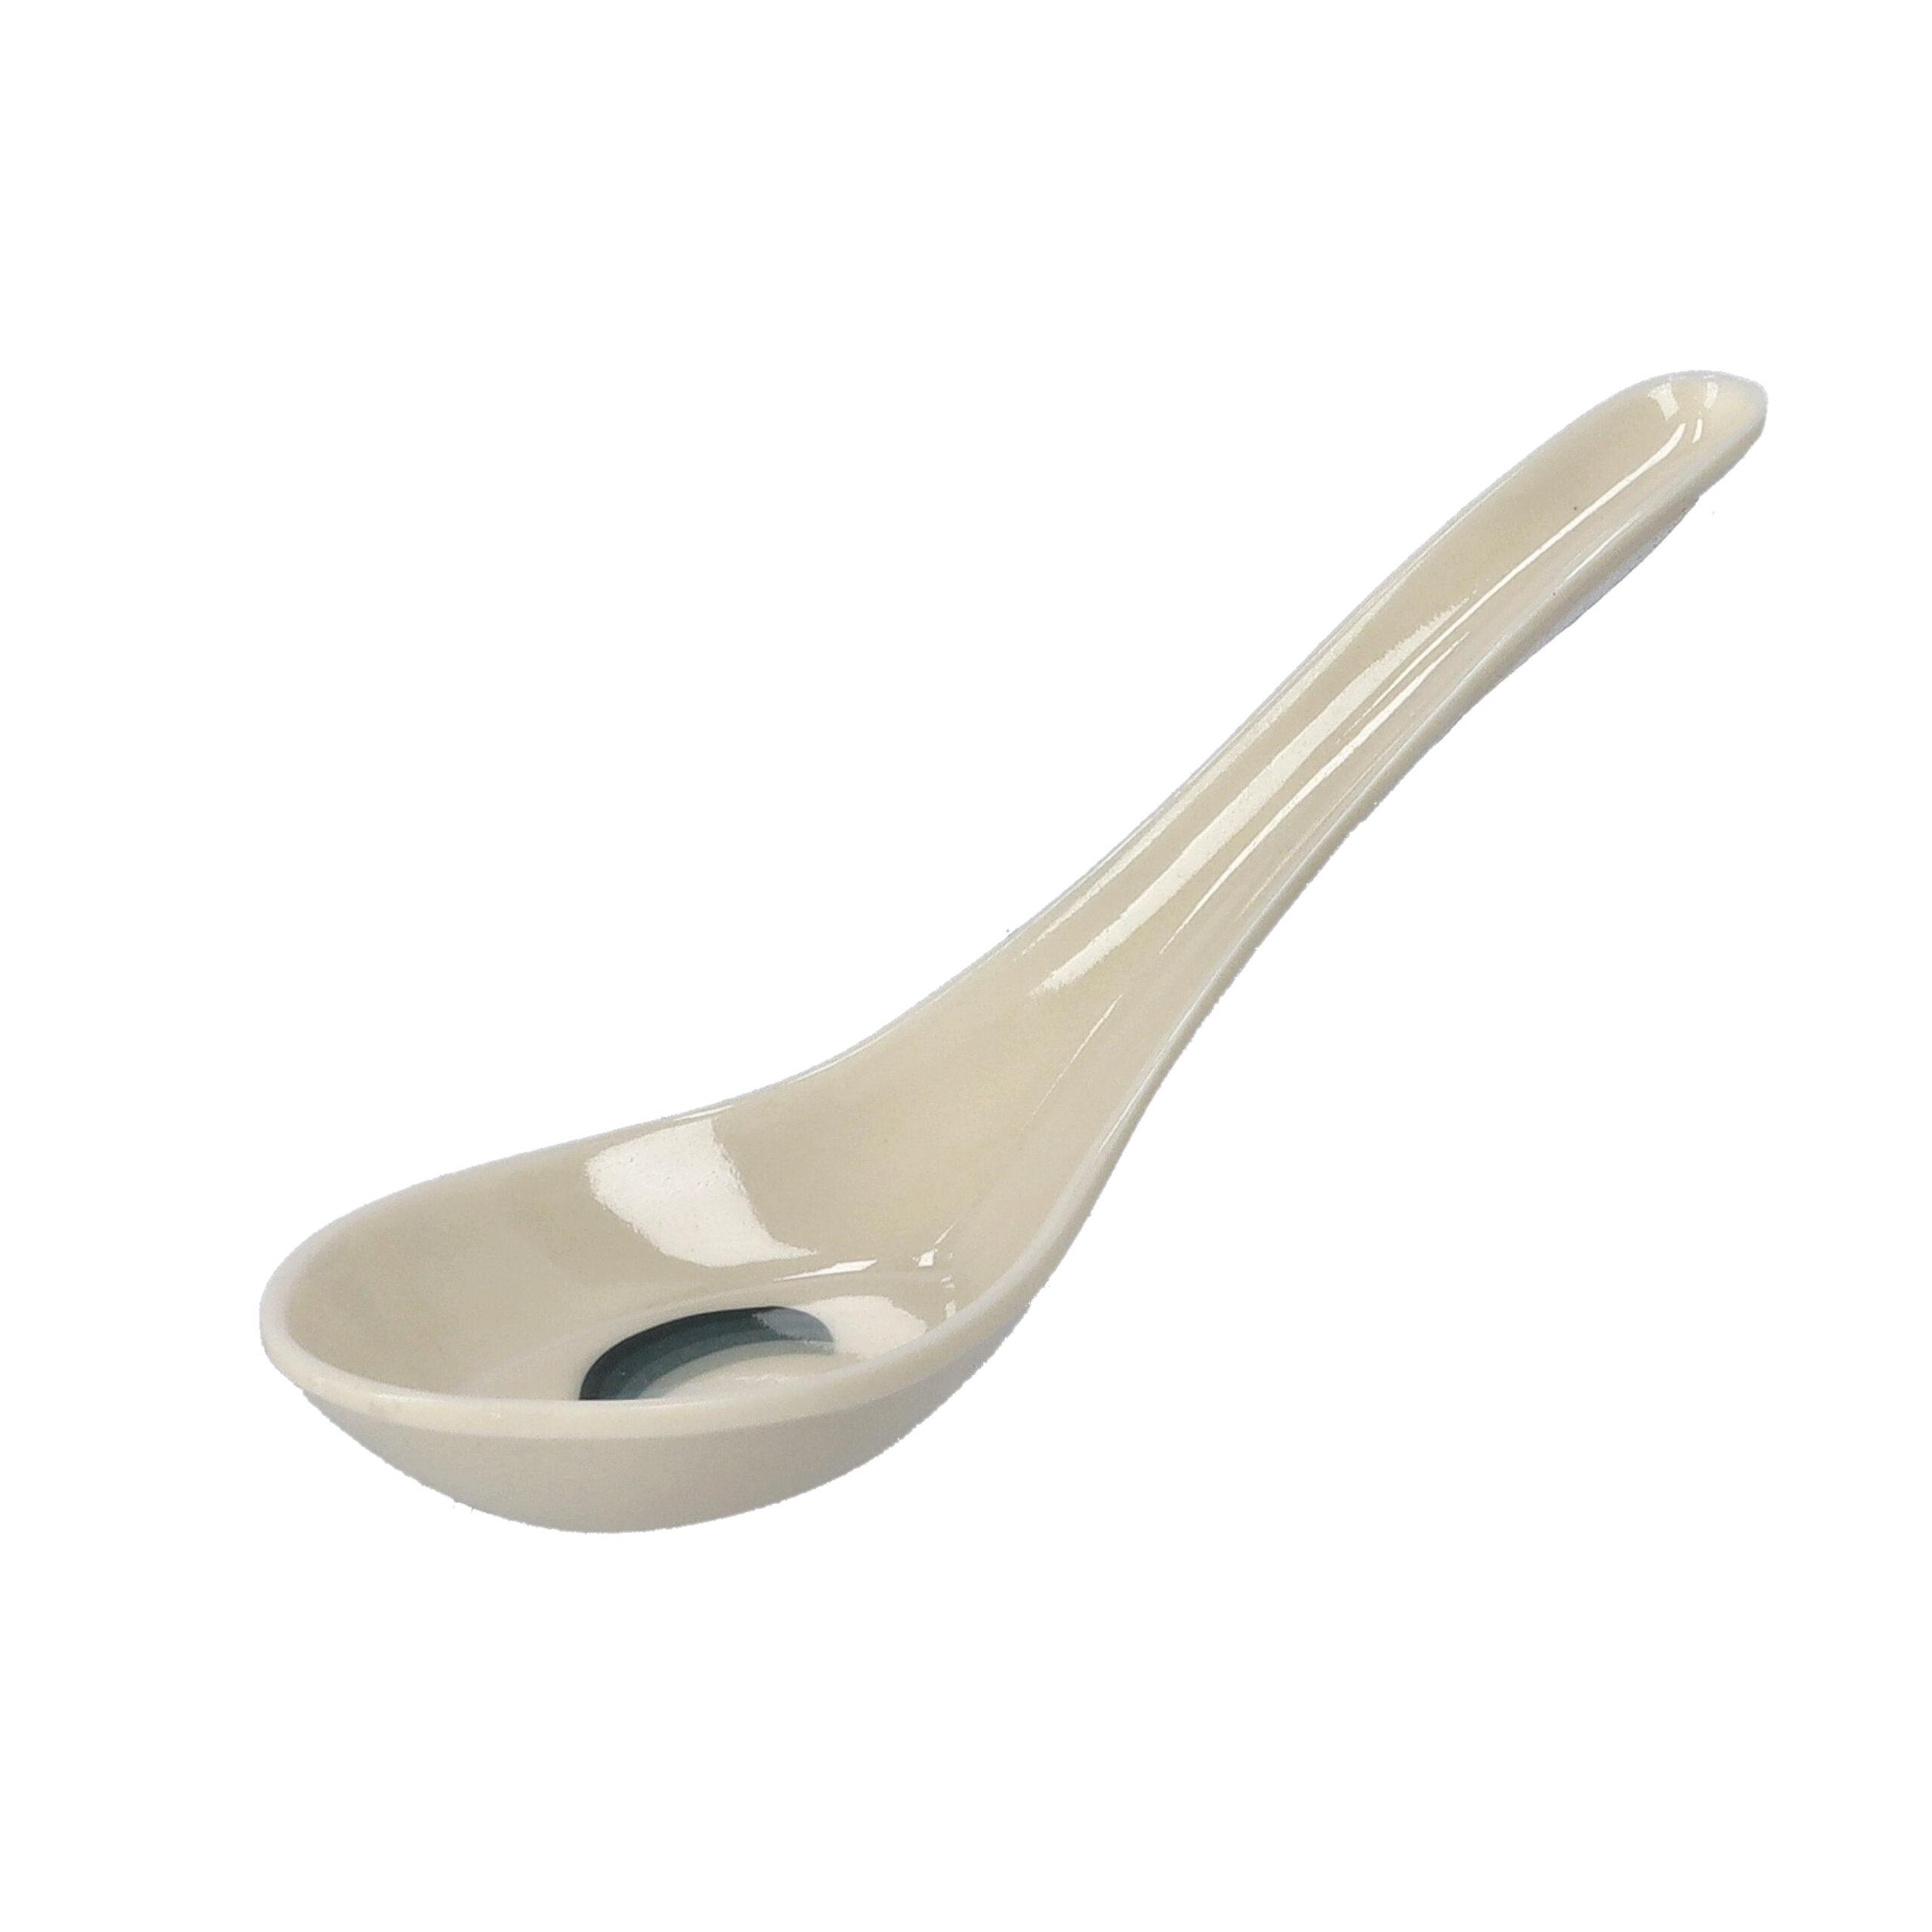 ملعقة تقديم طعام ميلامين 5.5 بوصة Royalford - 5.5" Professional Melamine Spoon - Cooking And Serving Spoon With Grip Handle - cG9zdDo0MDYxMzI=